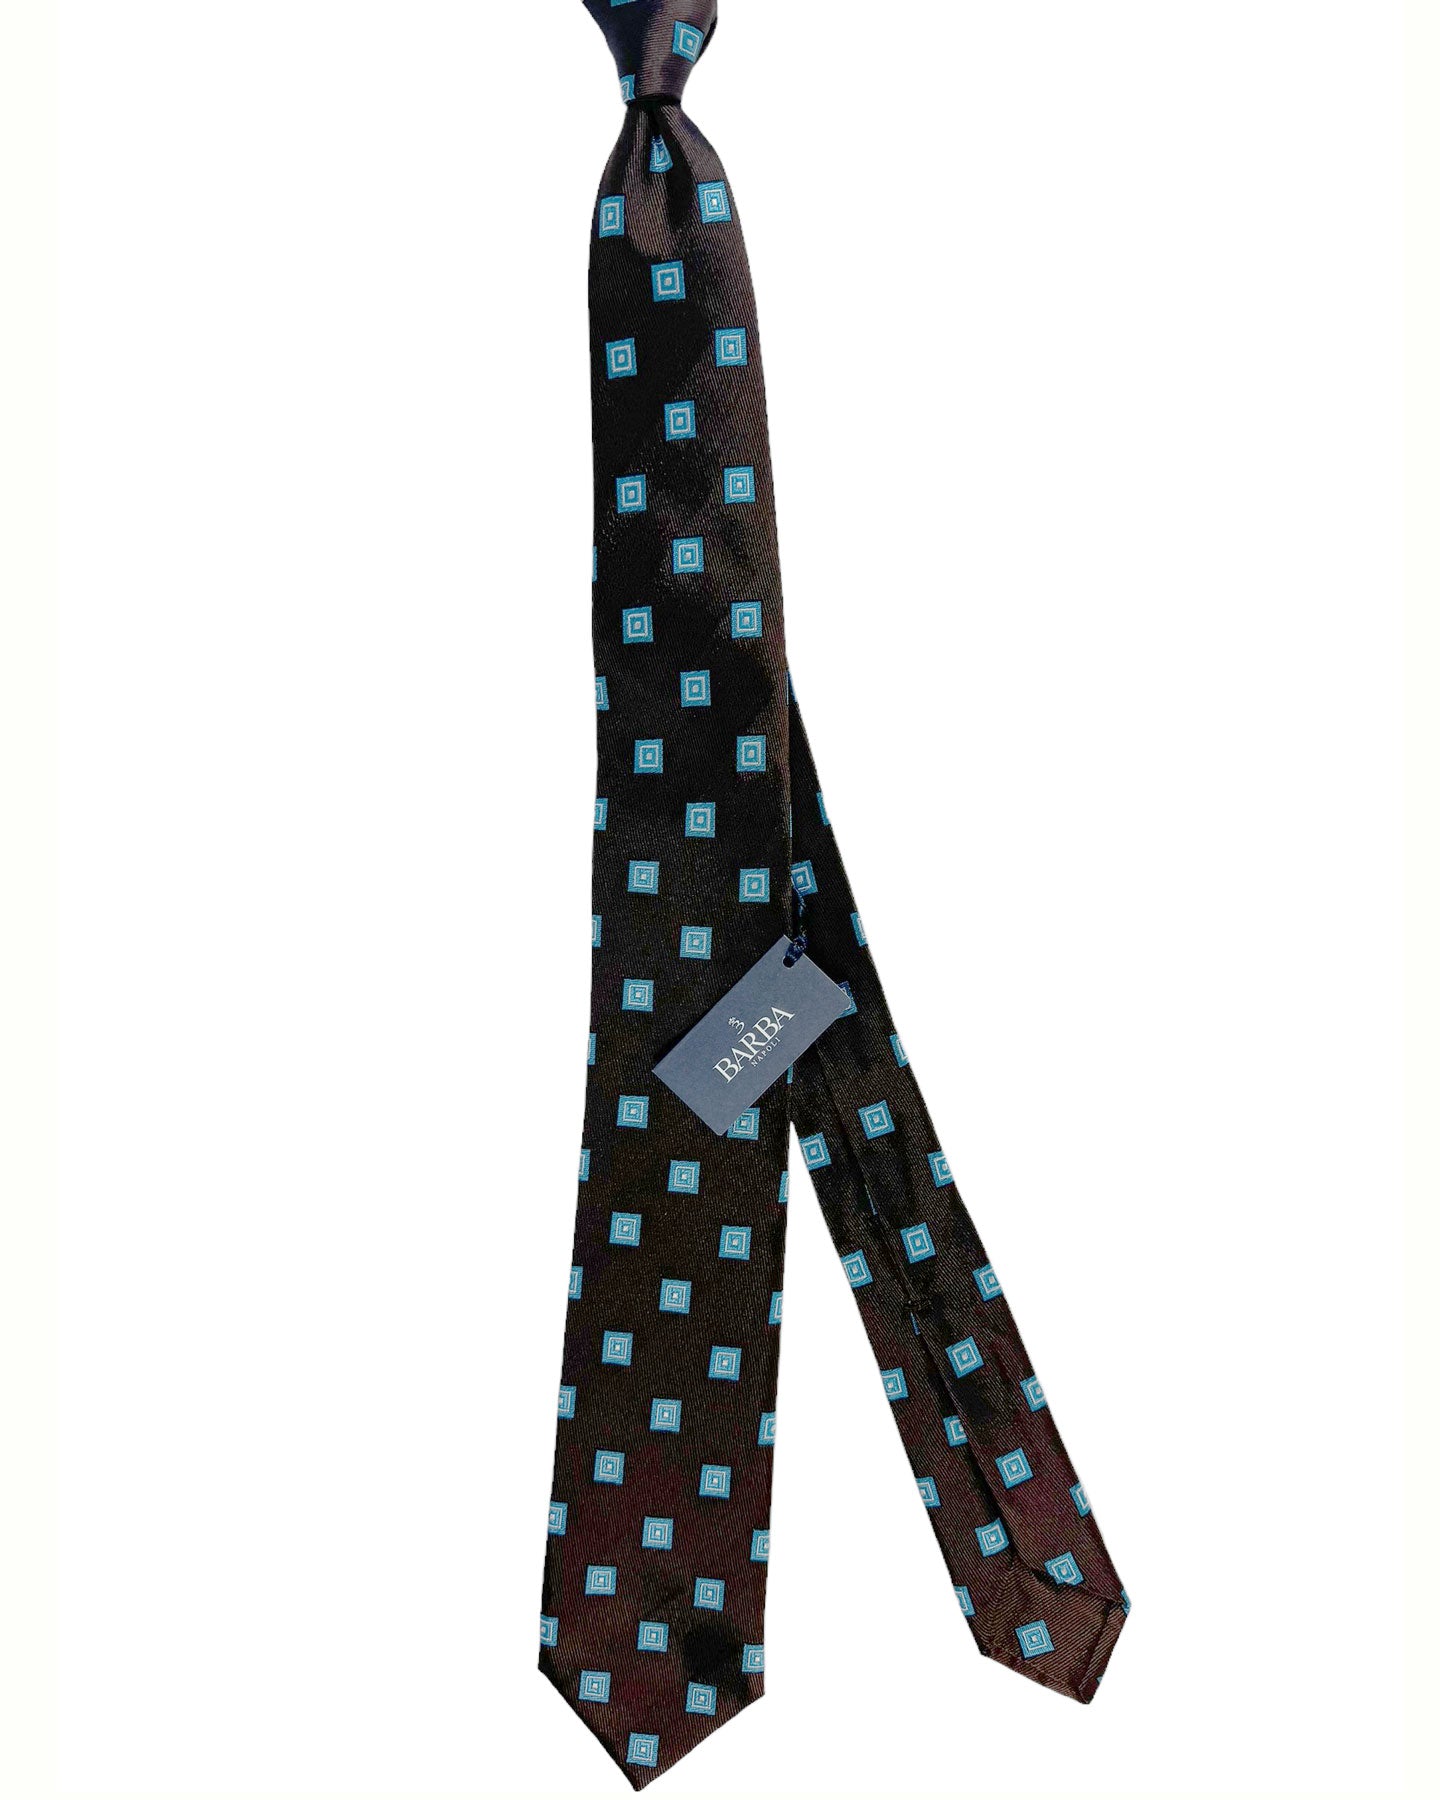 Barba Sevenfold Tie Brown Aqua Silver Geometric Design - Sartorial Neckwear